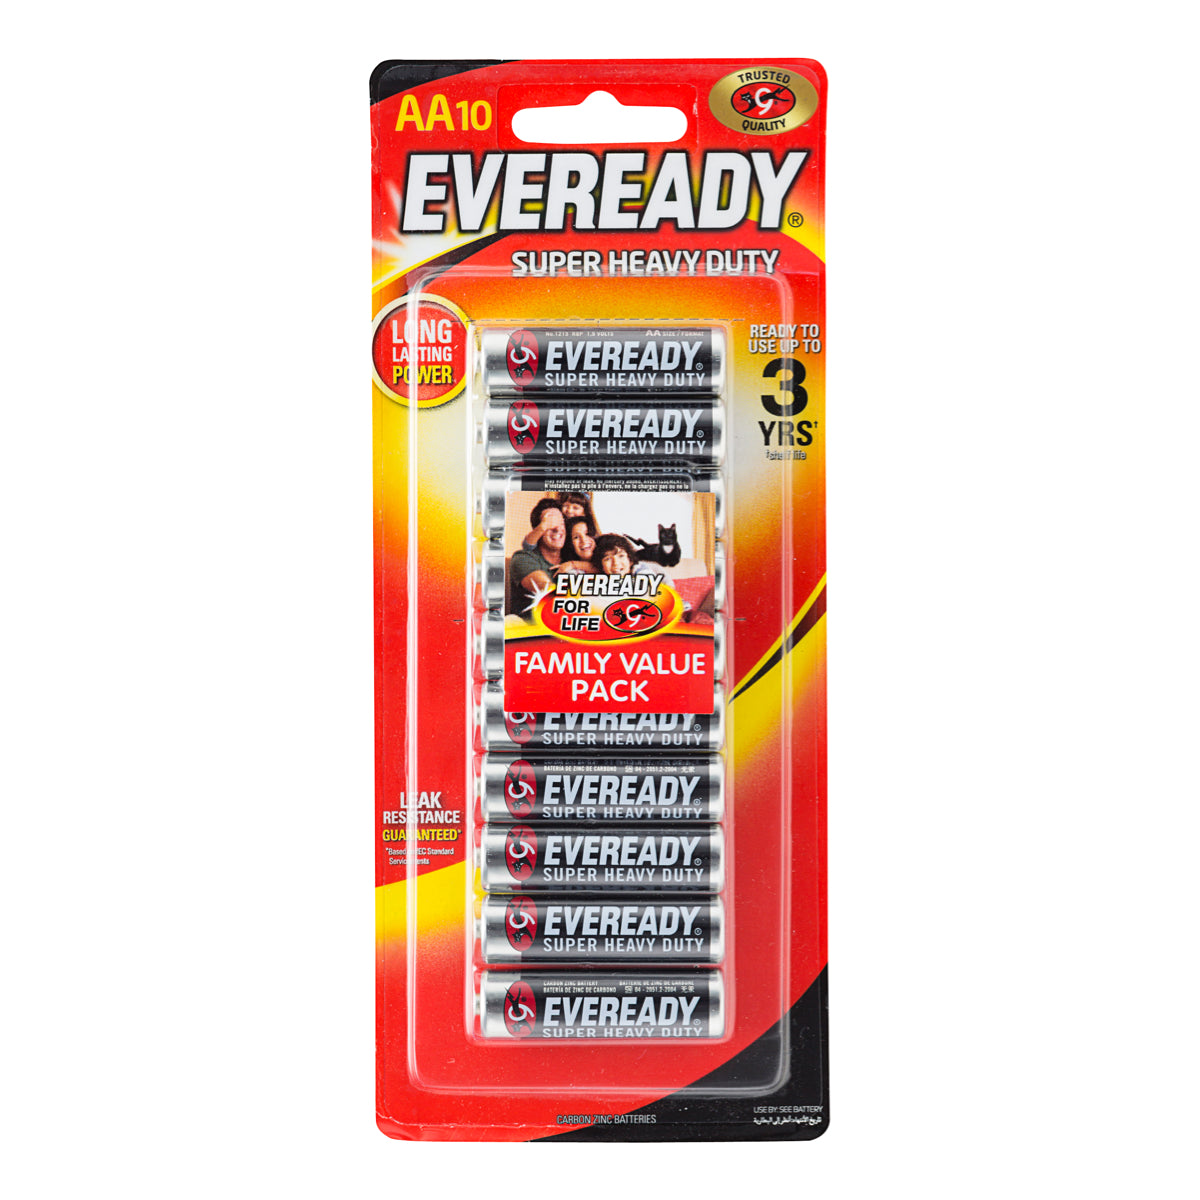 Eveready Super Heavy Duty AA Batteries 10pk